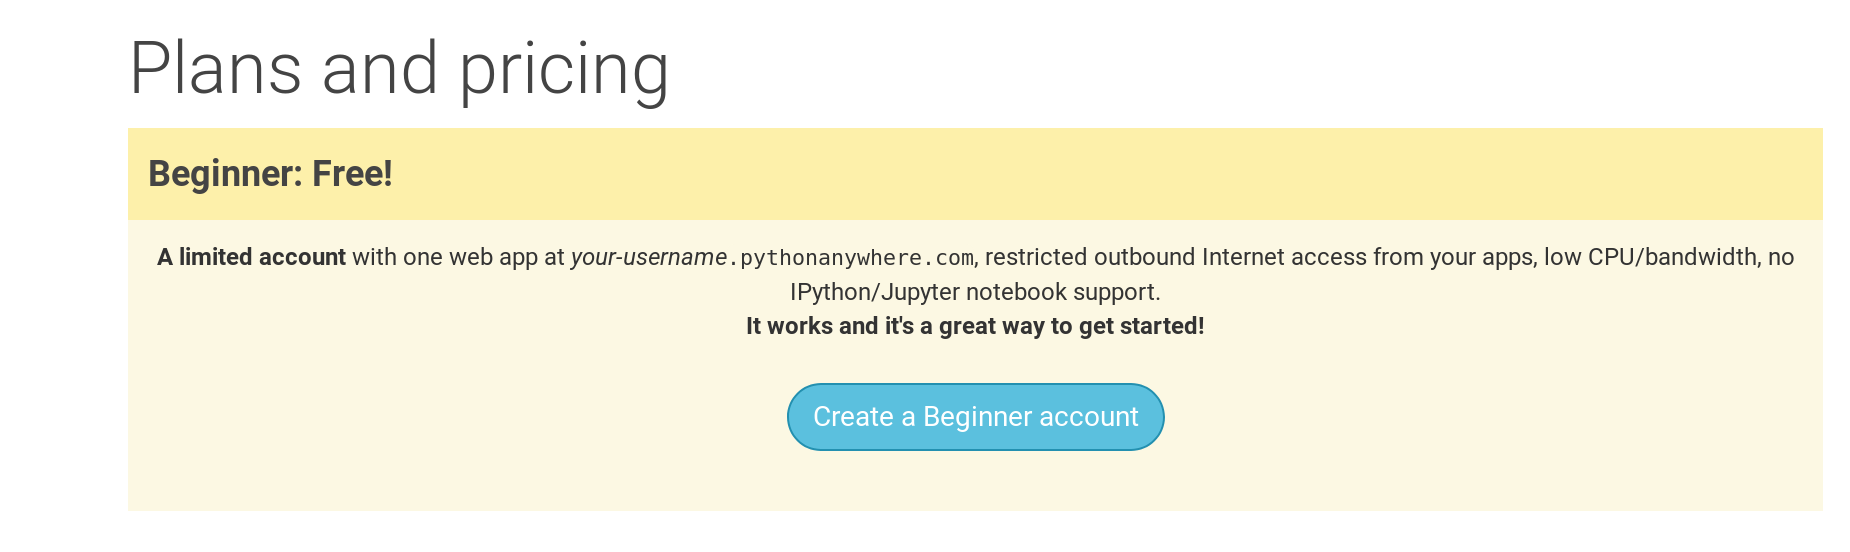 H σελίδα εγγραφής του PythonAnywhere δείχνει ένα κουμπί για να δημιουργήσετε έναν δωρεάν «Beginner» λογαριασμό